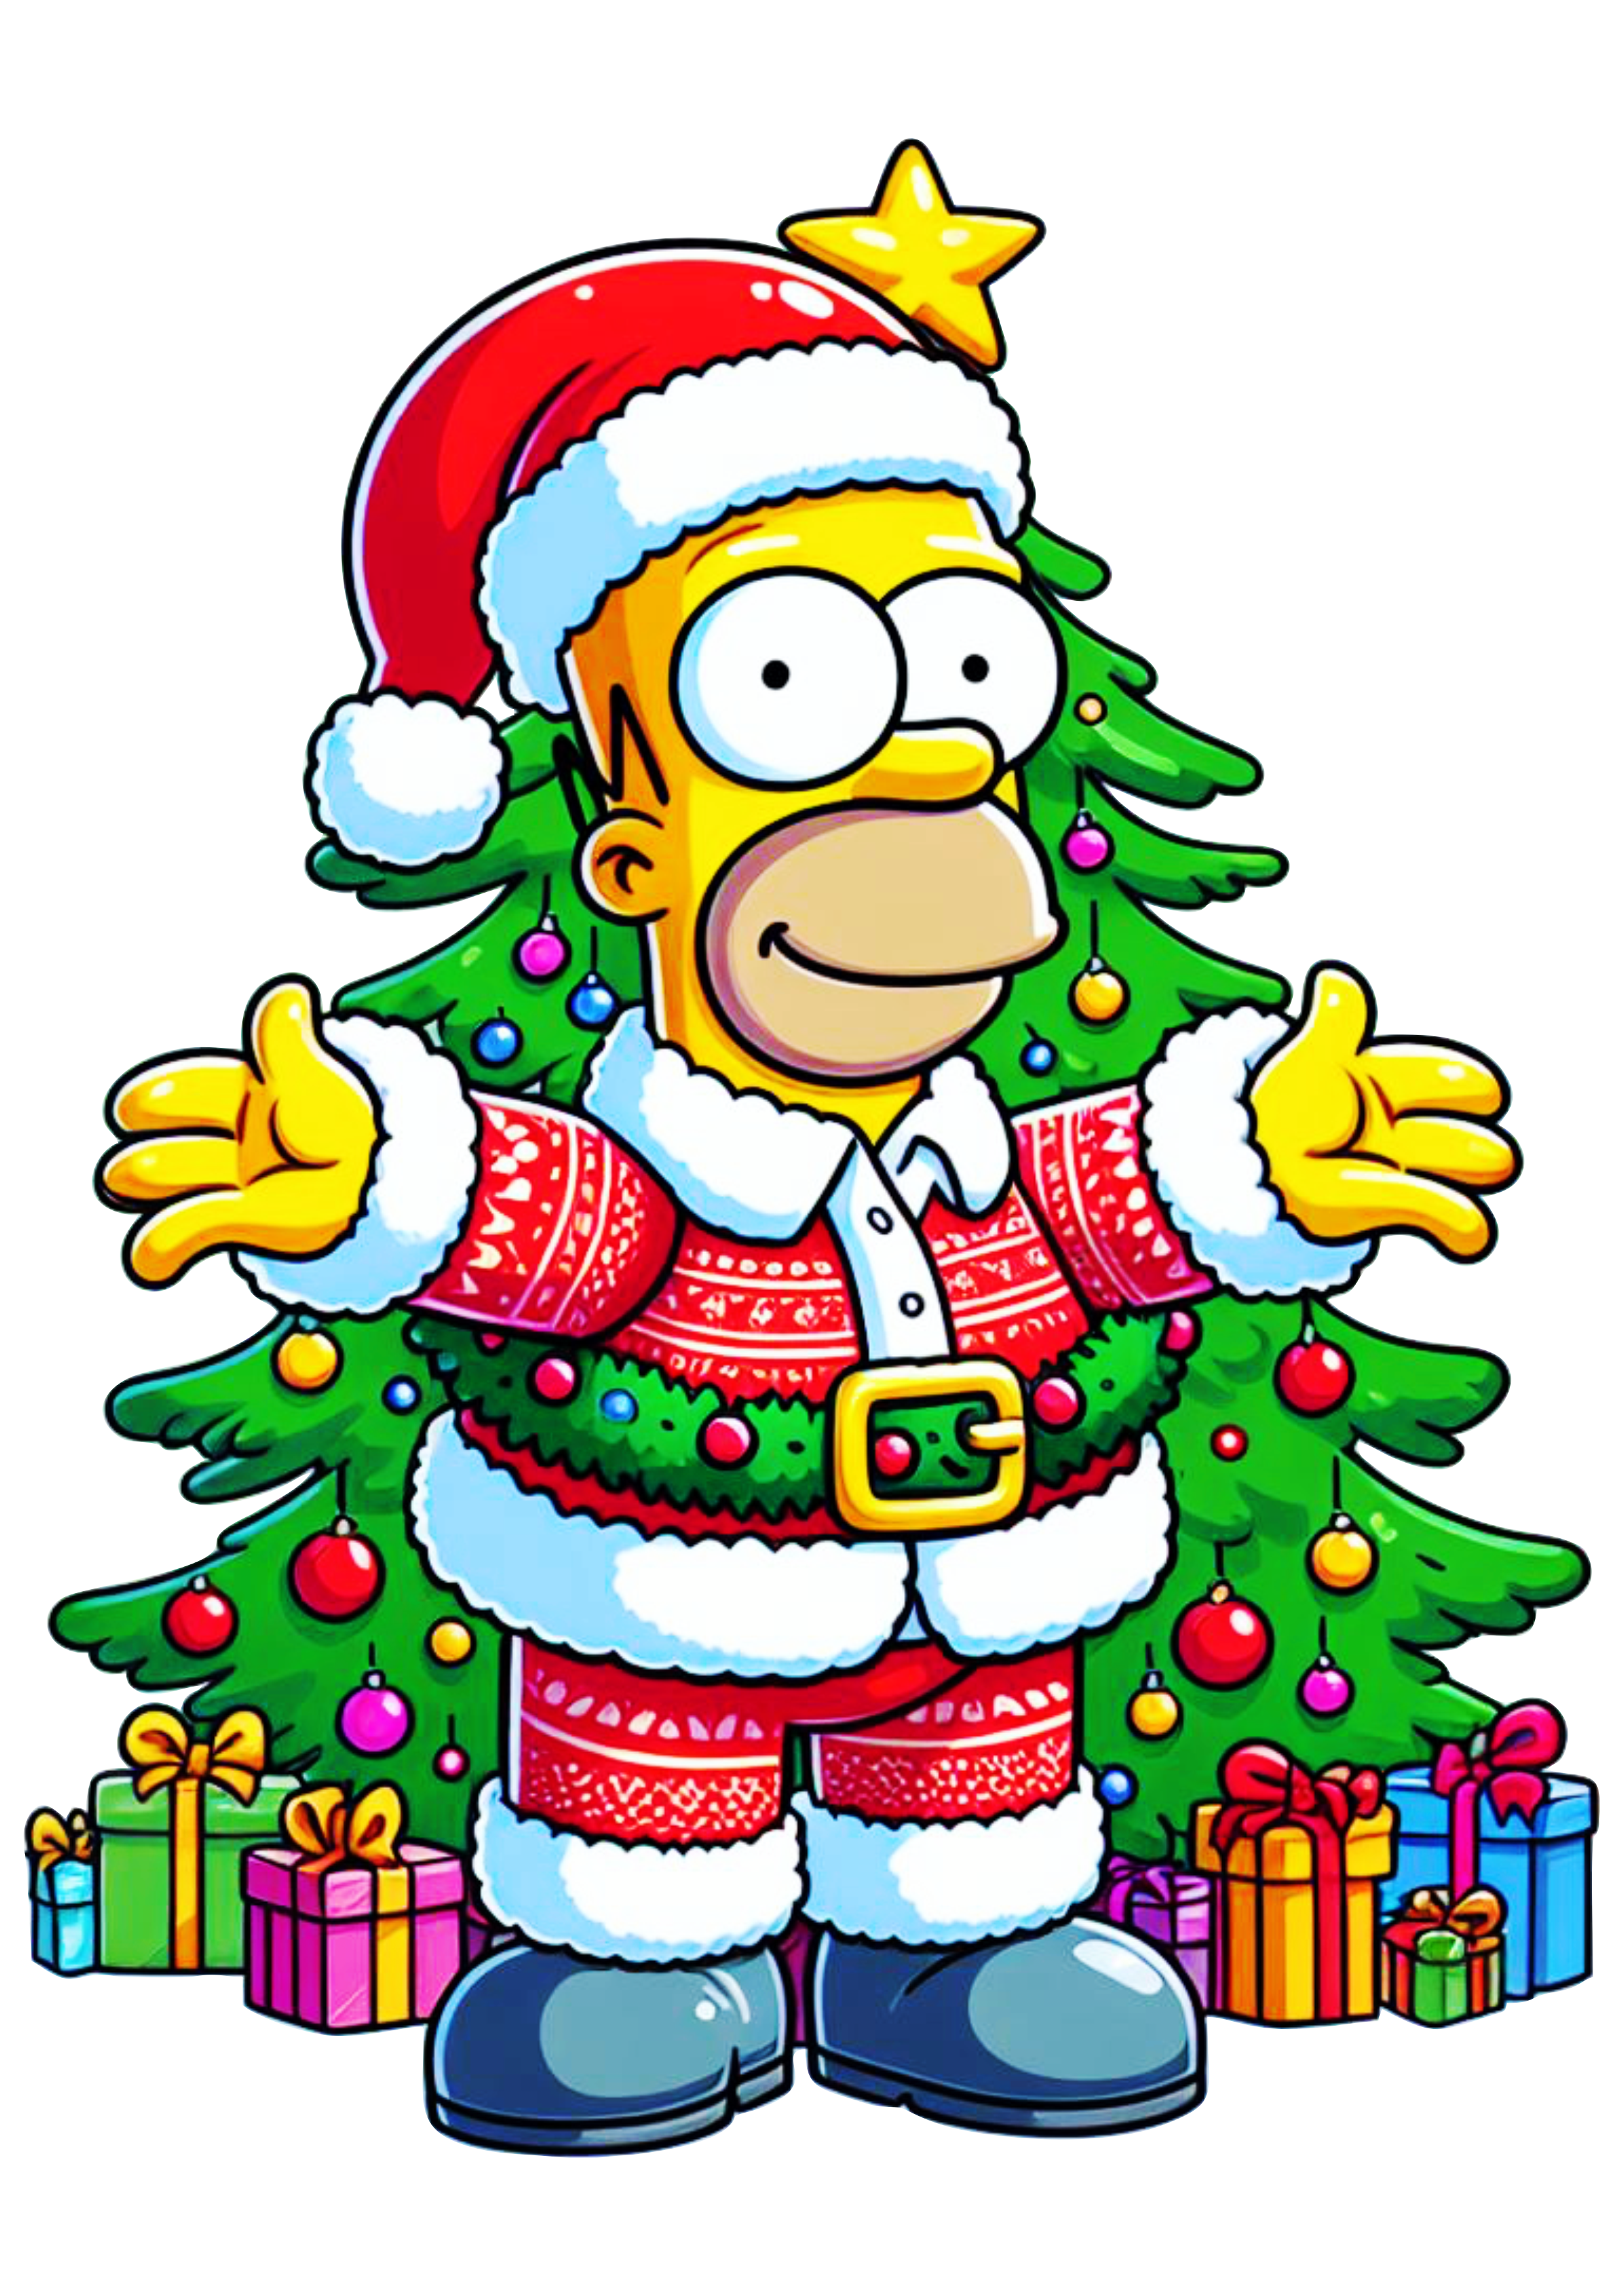 Os simpsons Homer fantasiado de Papai Noel desenho simples árvore de natal png